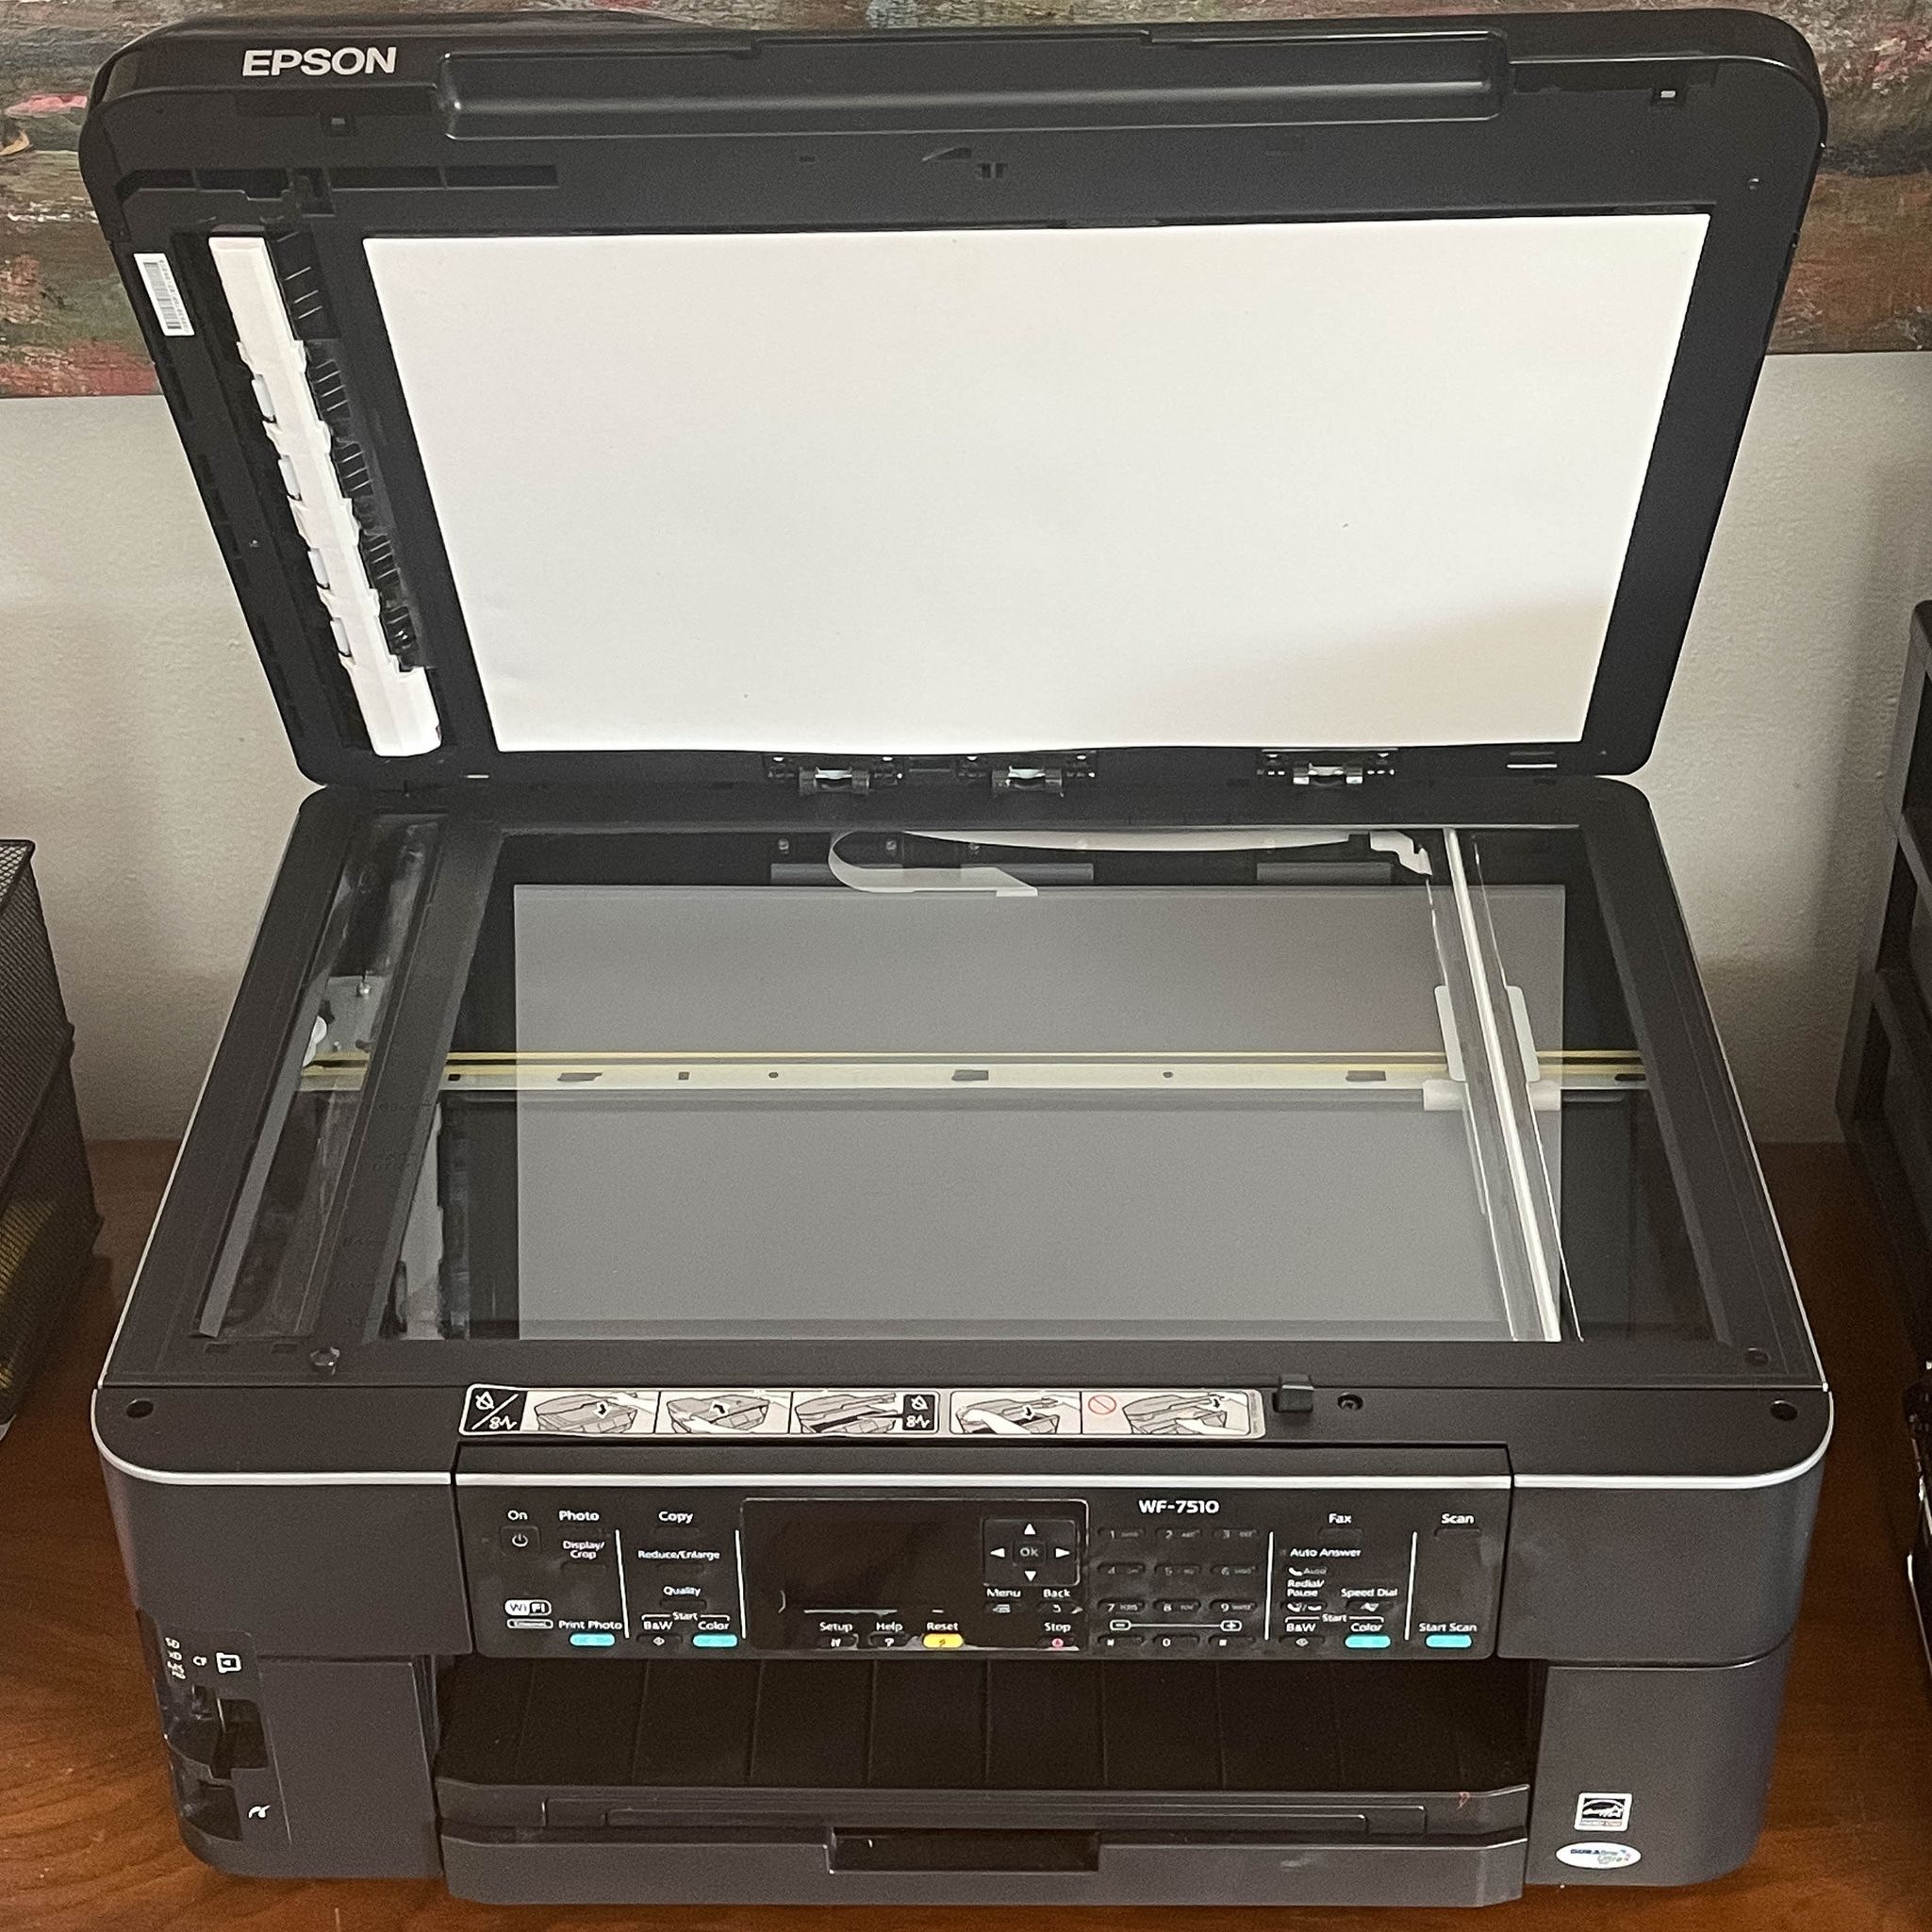 Epson Workforce Wf 7510 All In One Printer For Sale In Hialeah Fl Offerup 5469